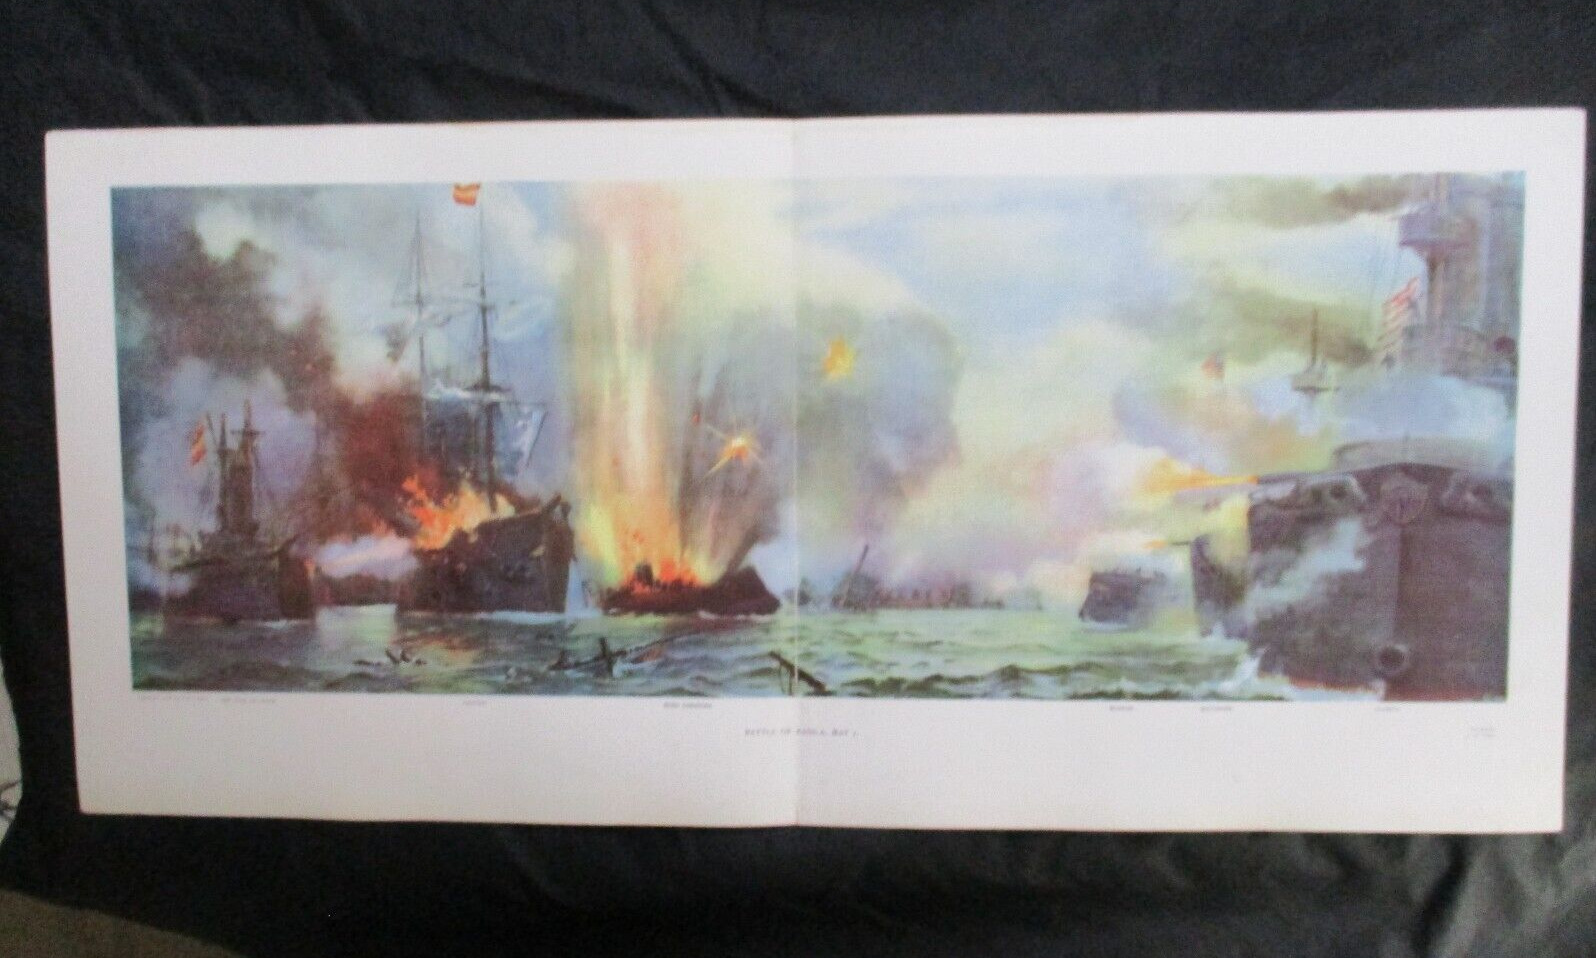 1898 Spanish American War Print - Battle of Manila, May 1, 1898, Philippines